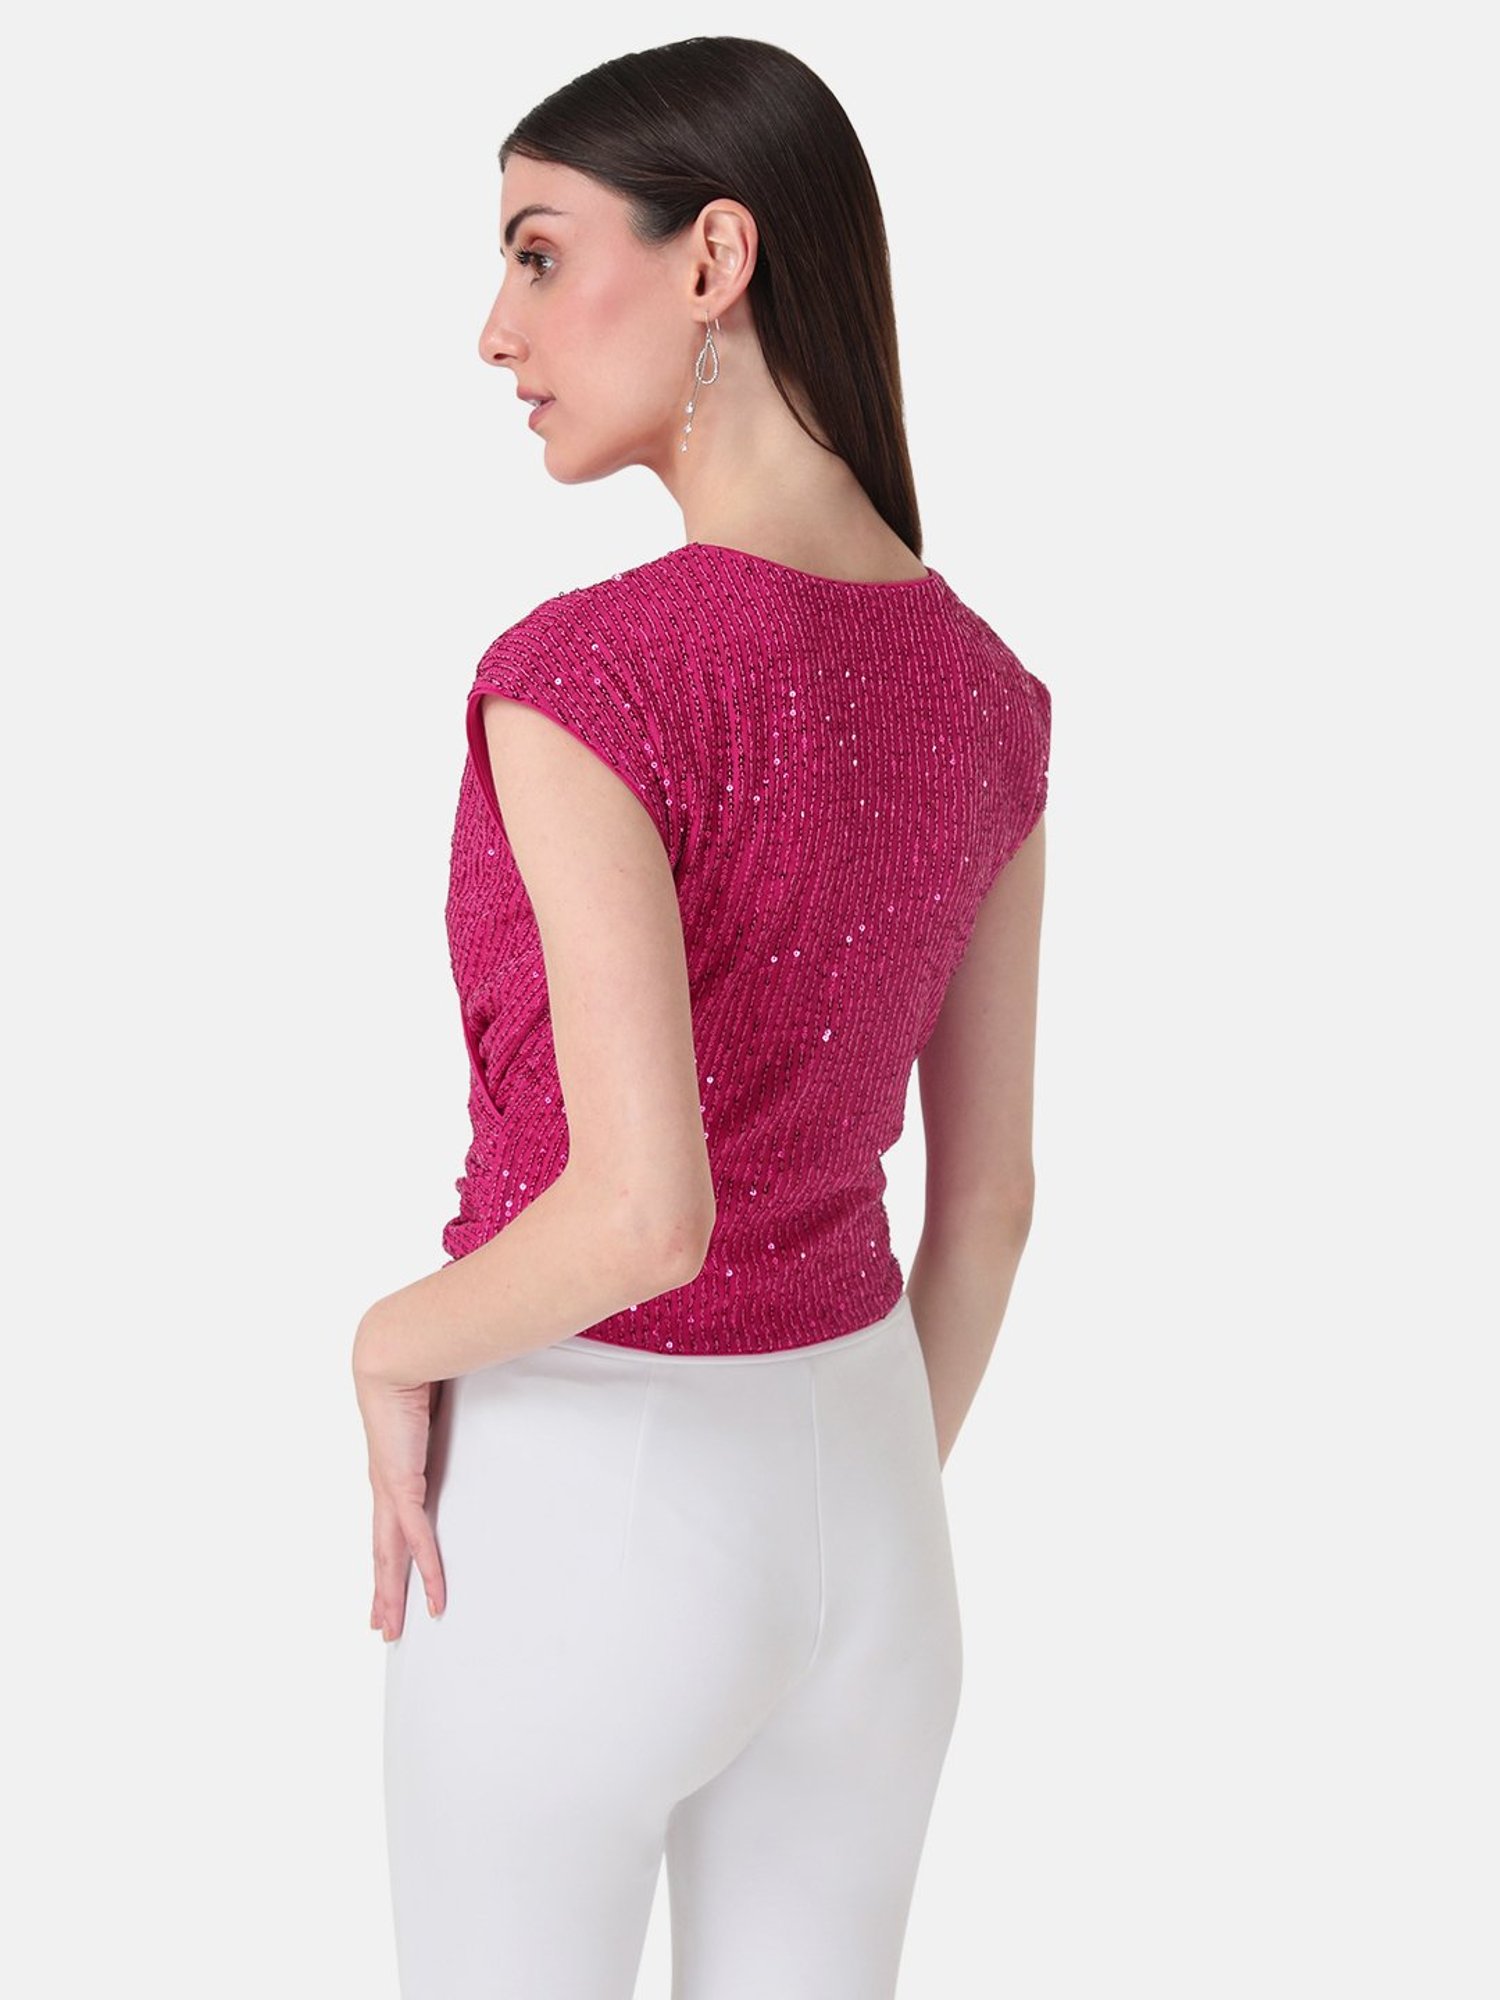 Buy Kazo Pink Embellished Casual Shirt for Women's Online @ Tata CLiQ